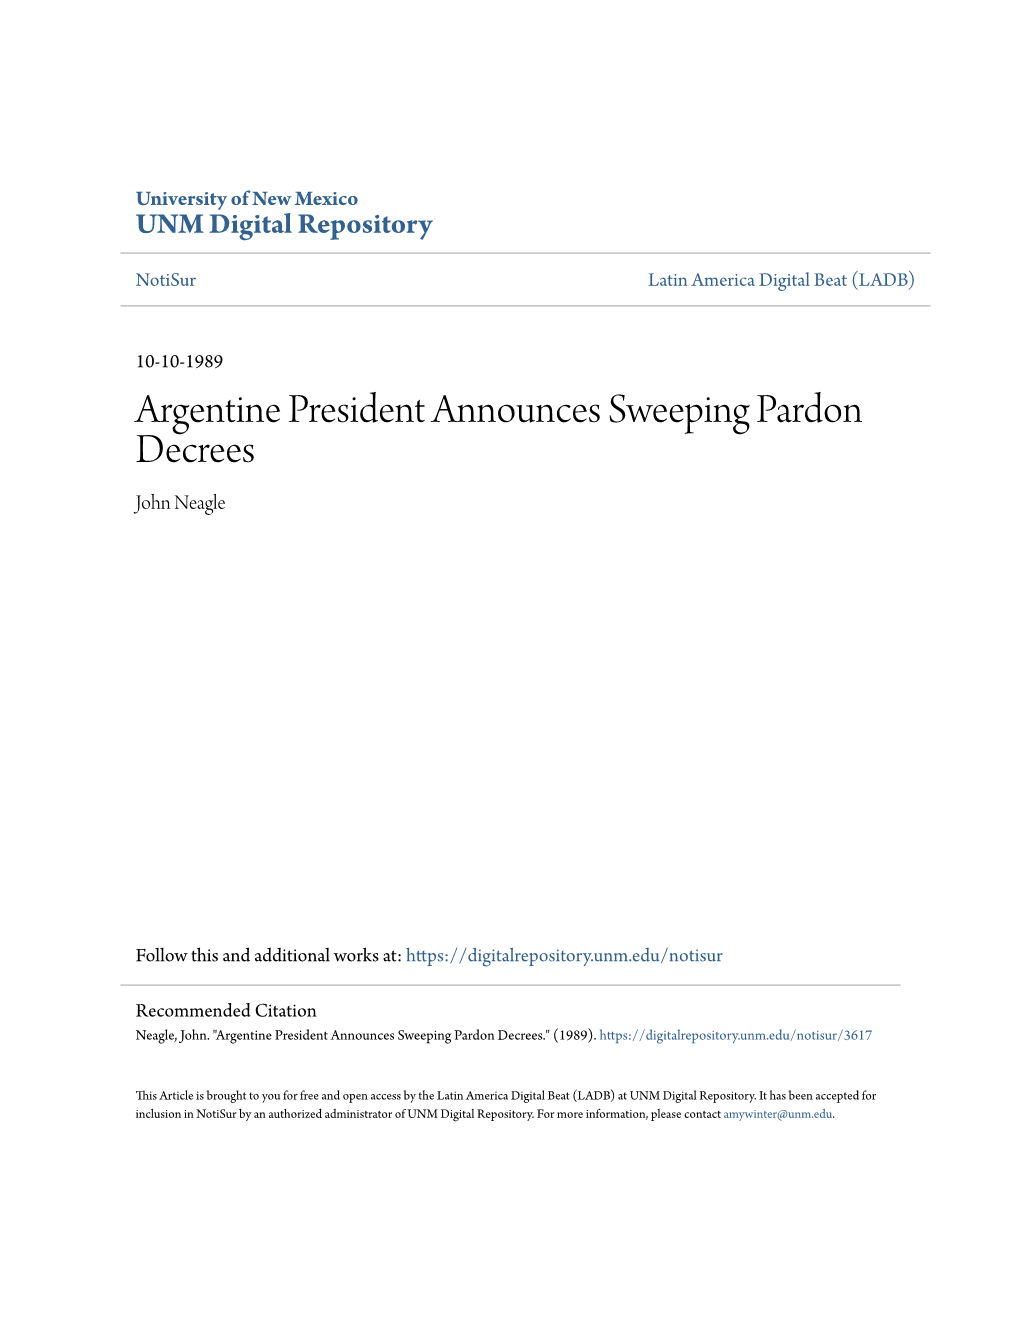 Argentine President Announces Sweeping Pardon Decrees John Neagle